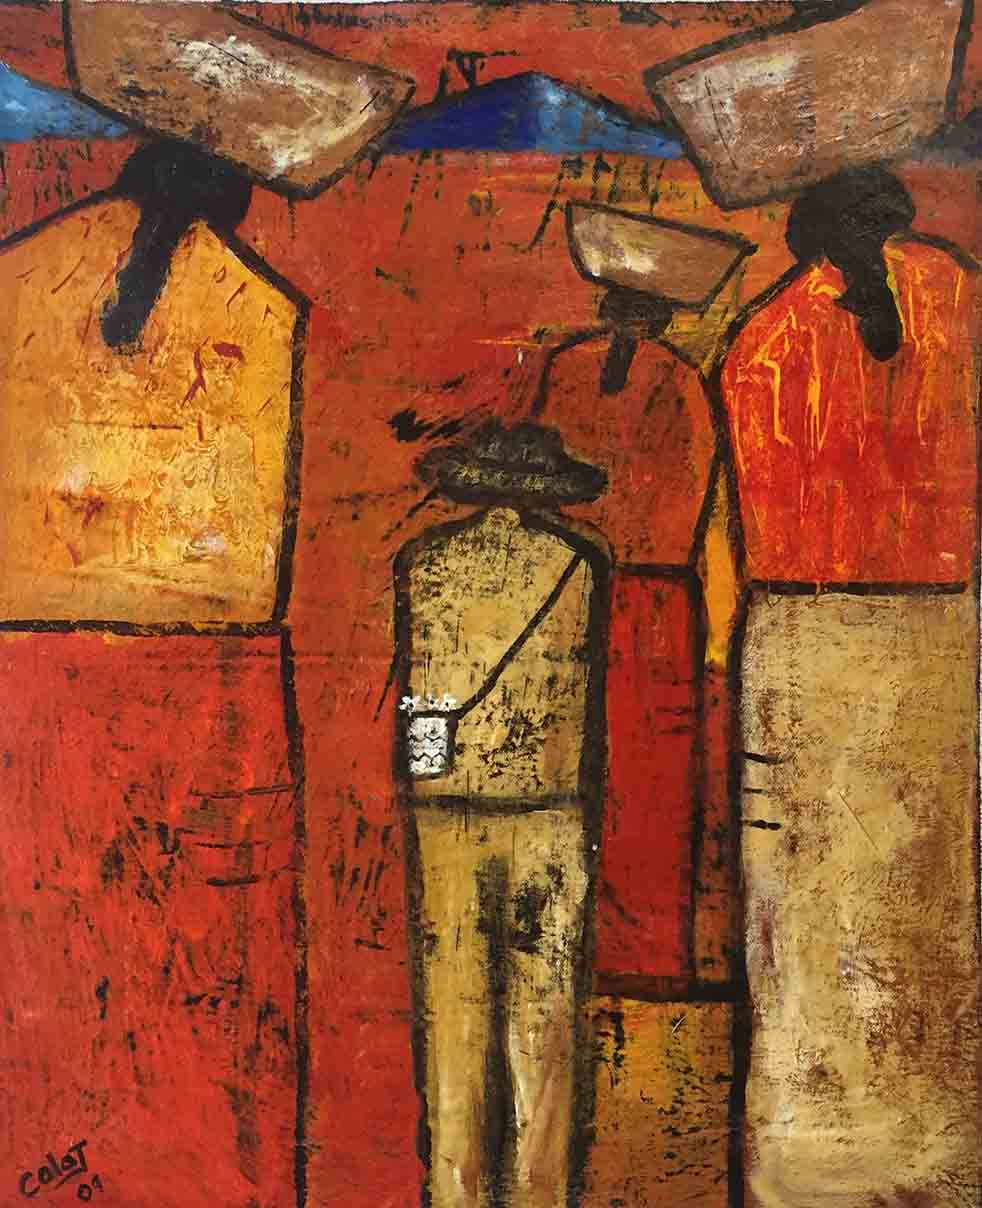 Vendedores - Jose Colaj 2011 - Guatemalan Indigenous Artist - Acrylic on canvas, 15" x 18" US$1740